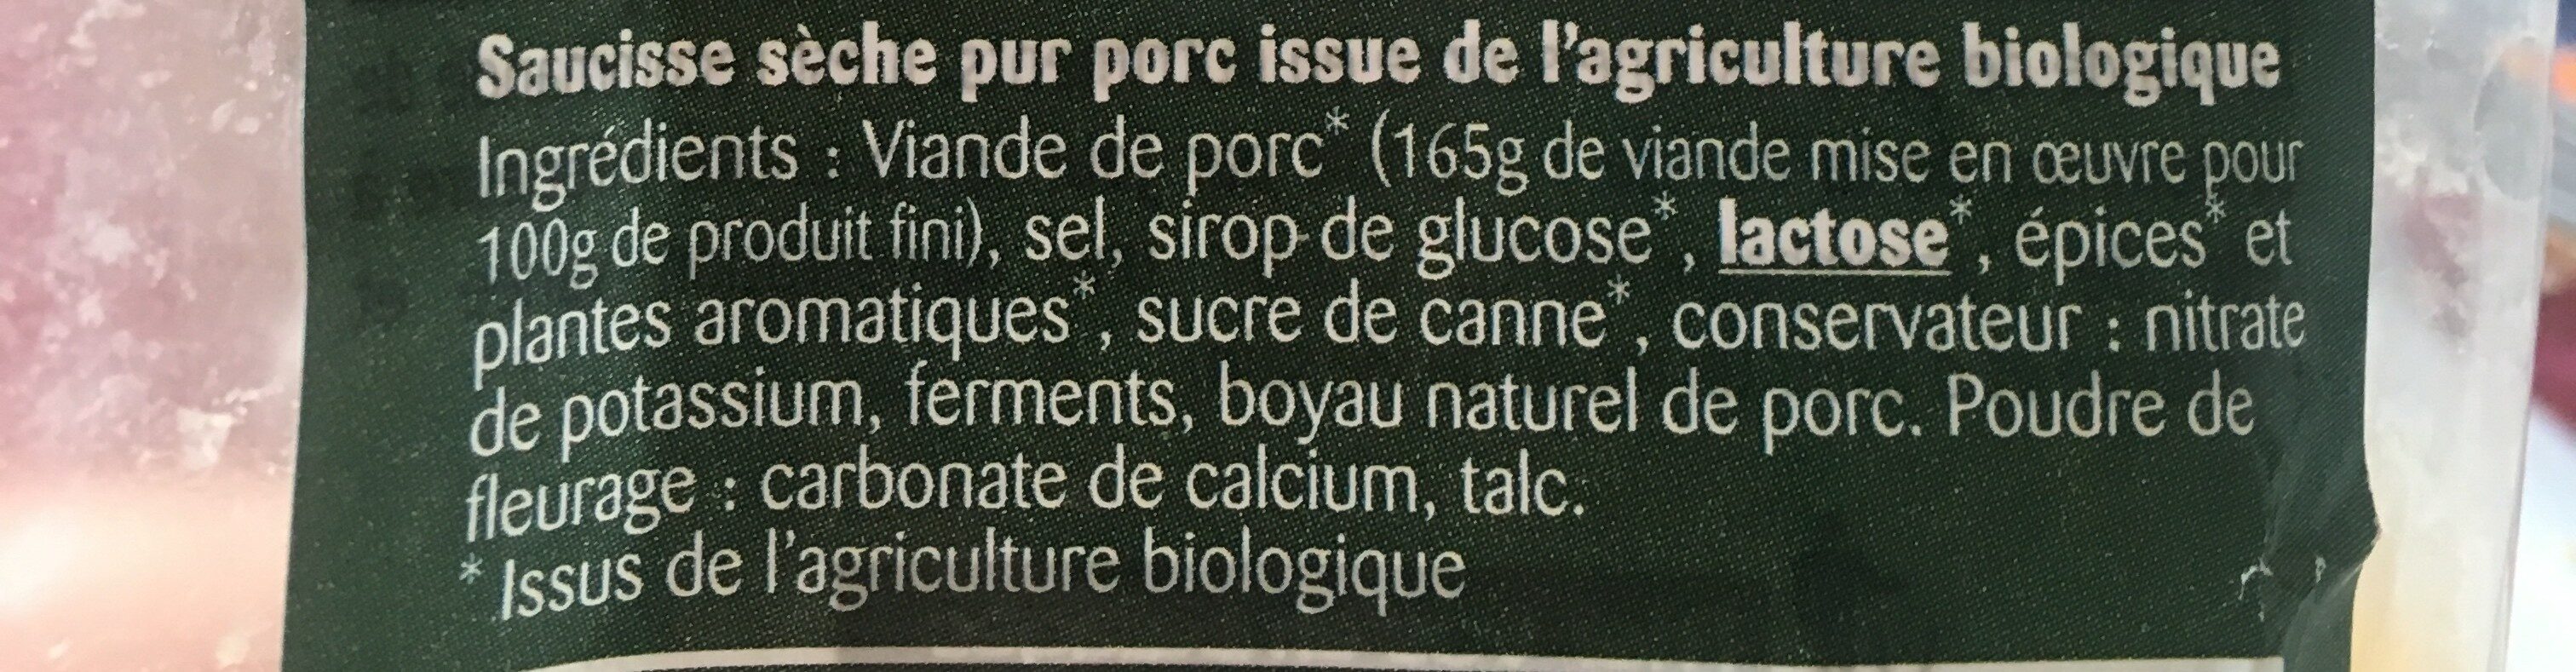 Saucisson Sec Bio - Ingredients - fr